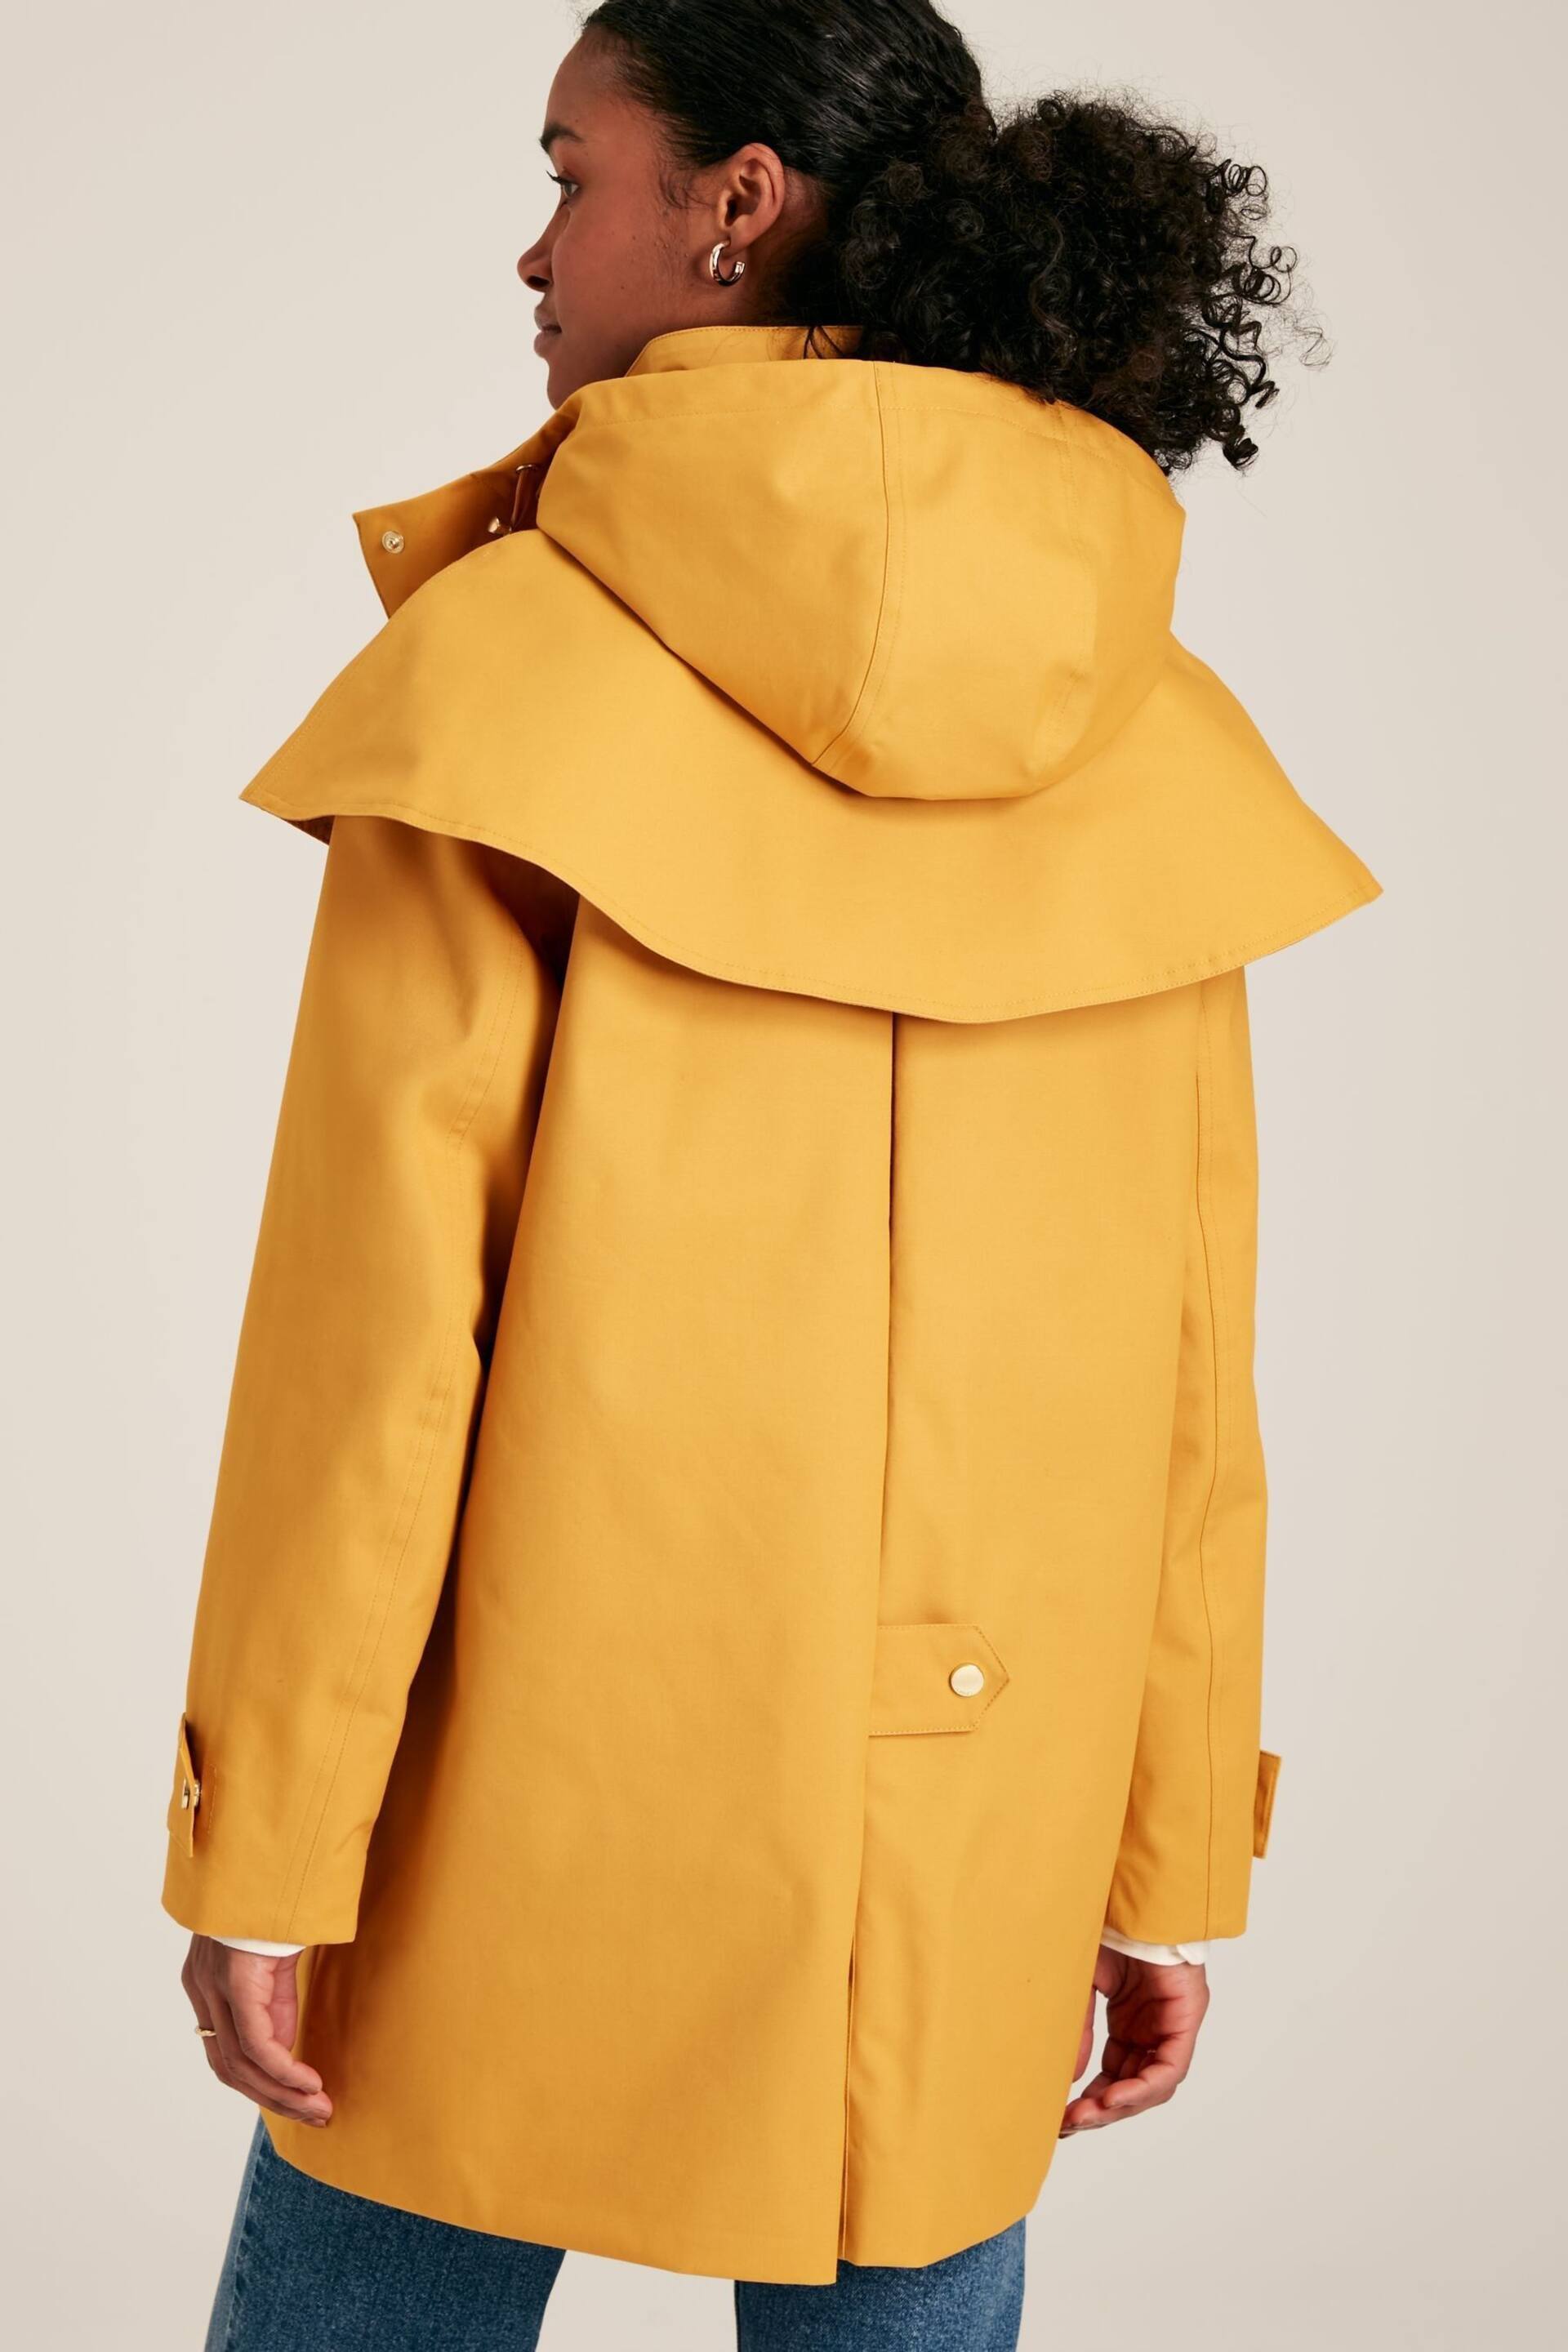 Joules Edinburgh Yellow Premium Waterproof Hooded Raincoat - Image 2 of 10